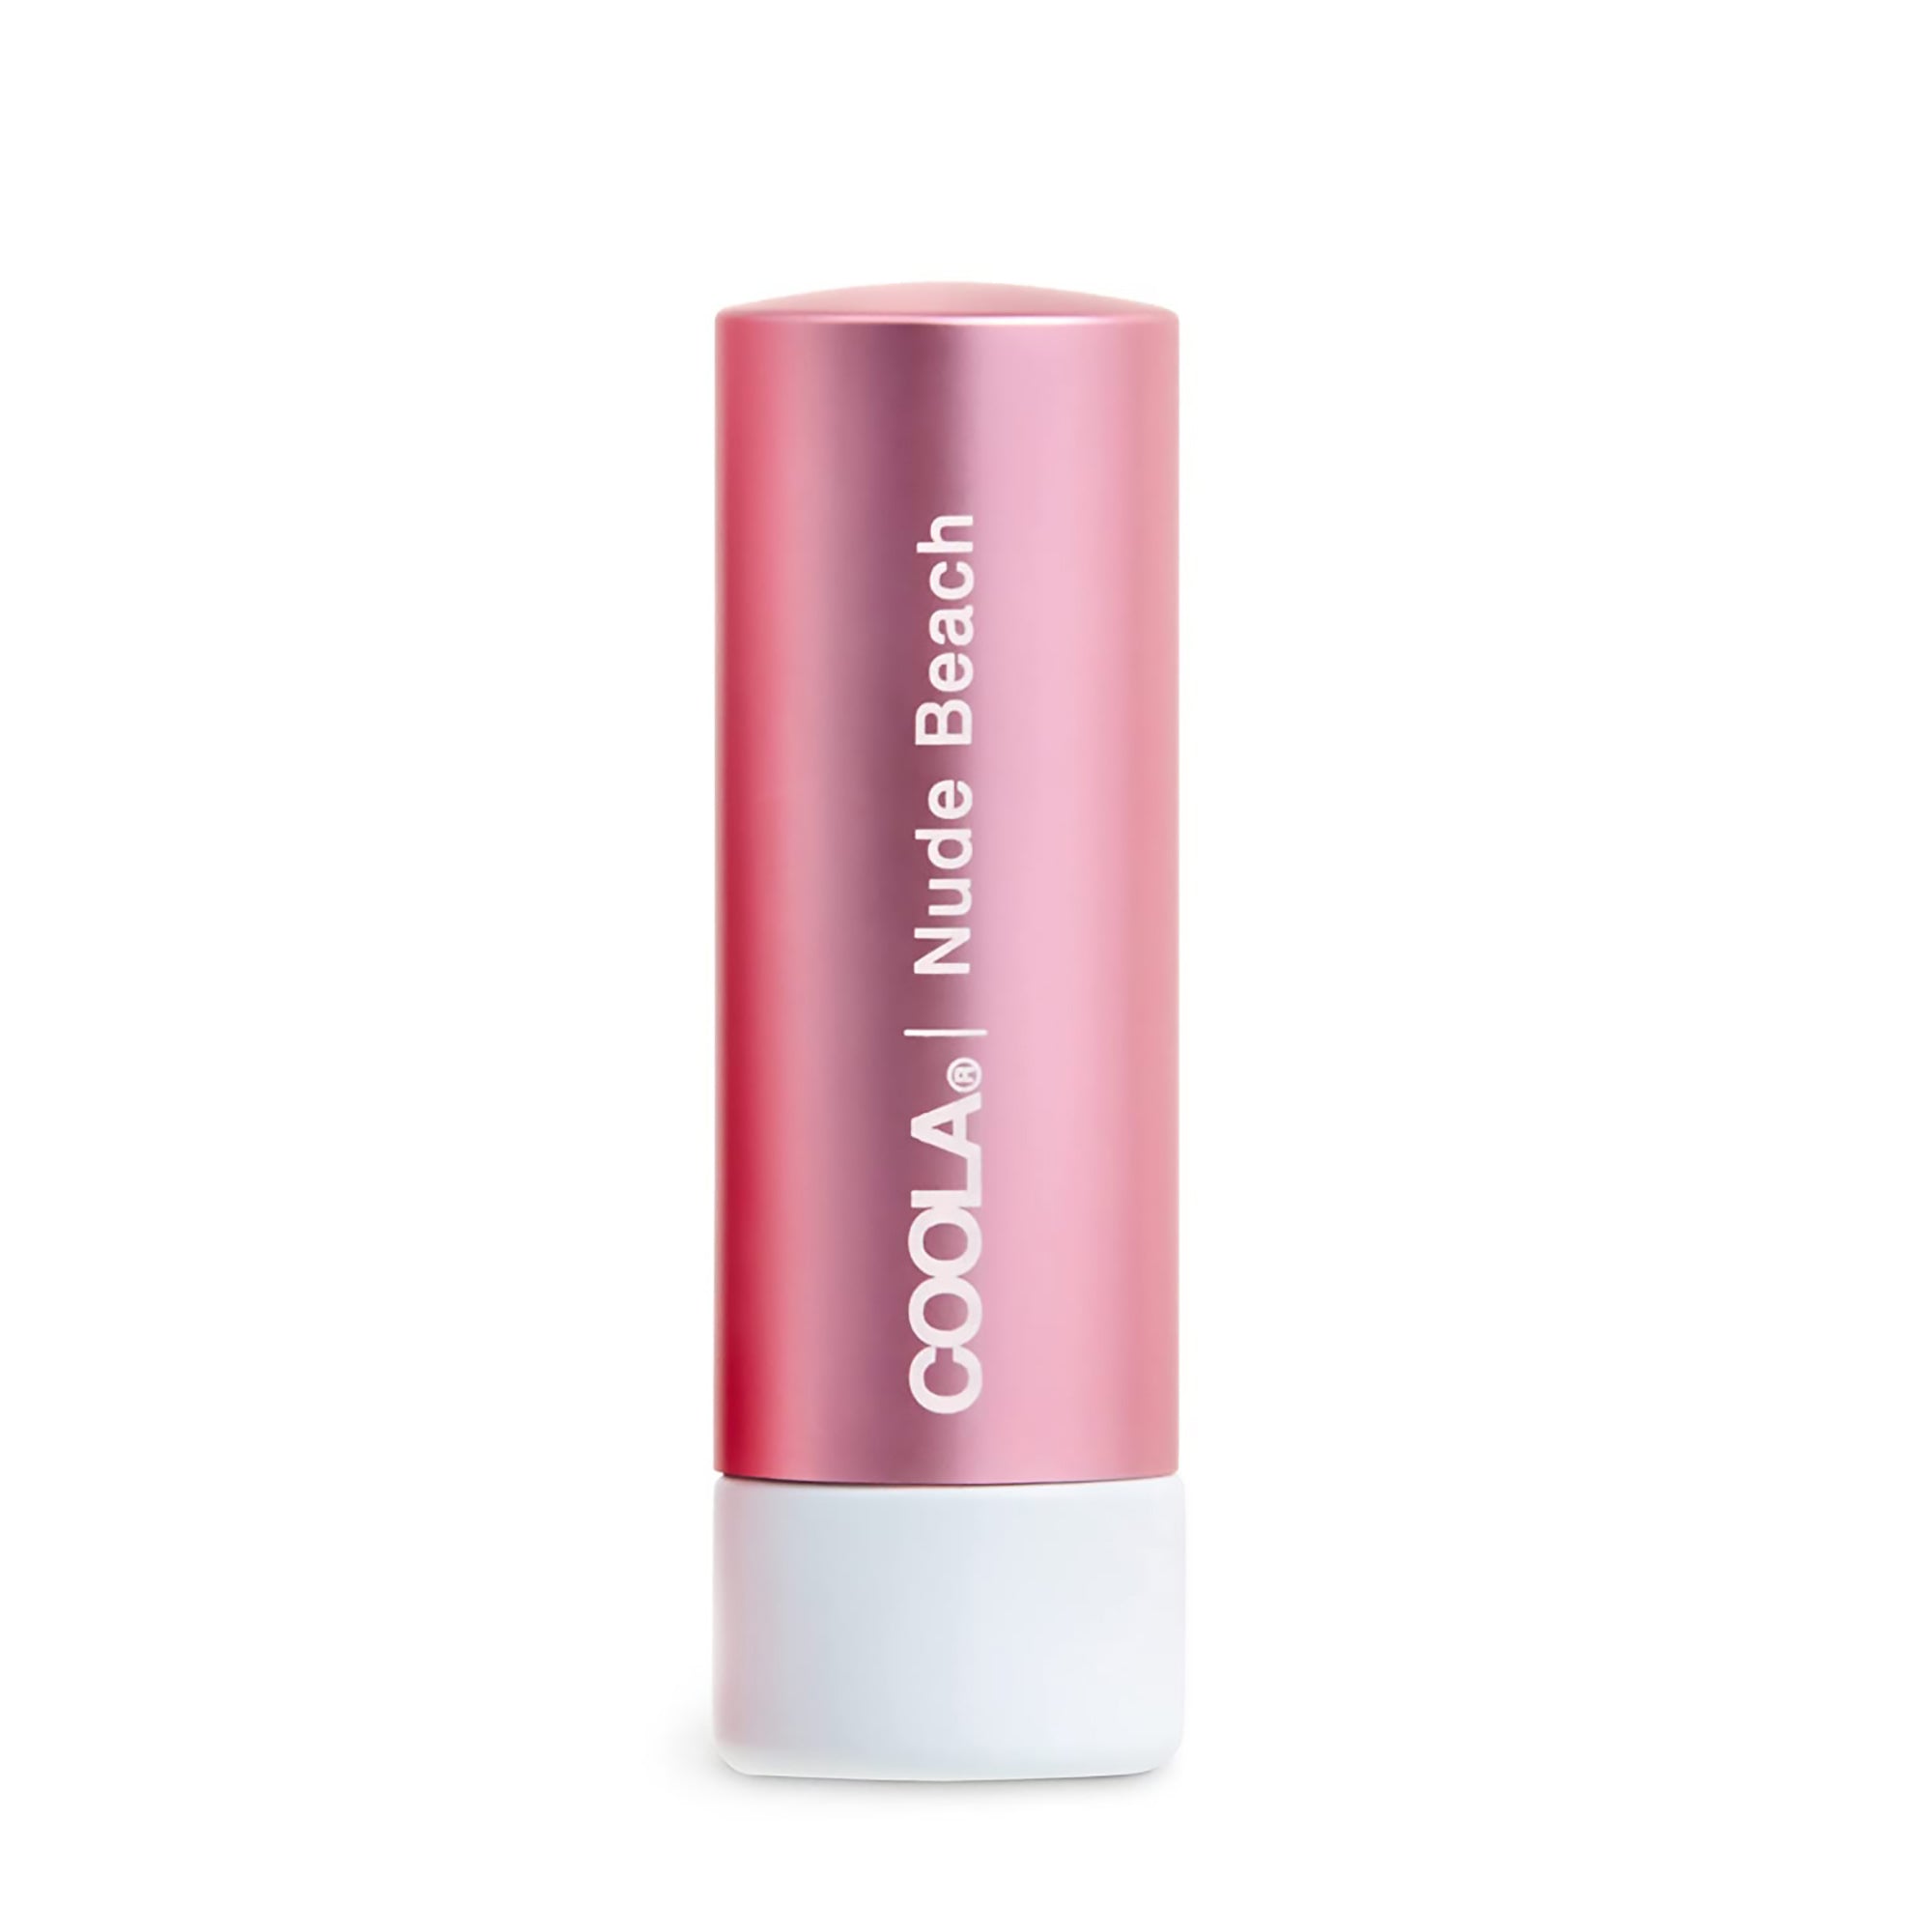 COOLA Suncare Mineral Liplux Organic Tinted Lip Balm Sunscreen SPF 30 - Nude Beach / NUDE BEACH